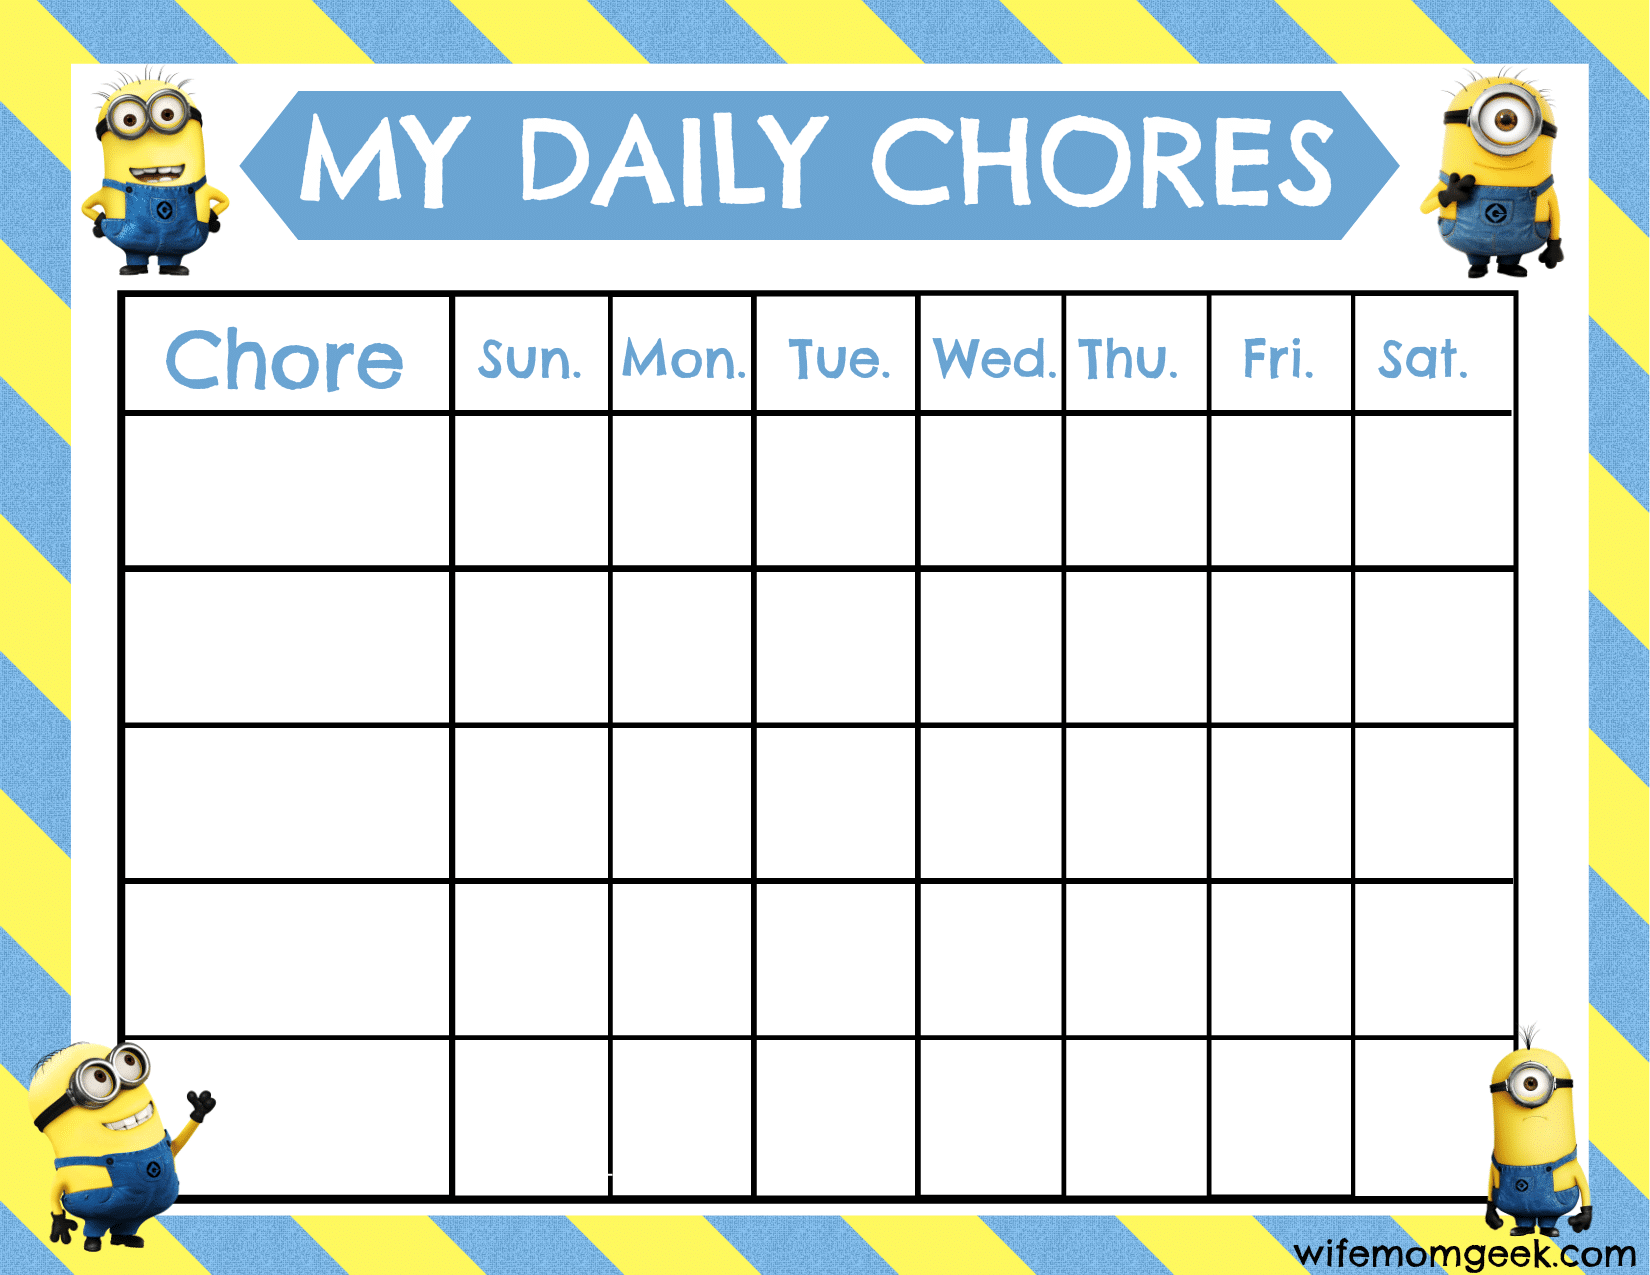 Minion chore chart free printable